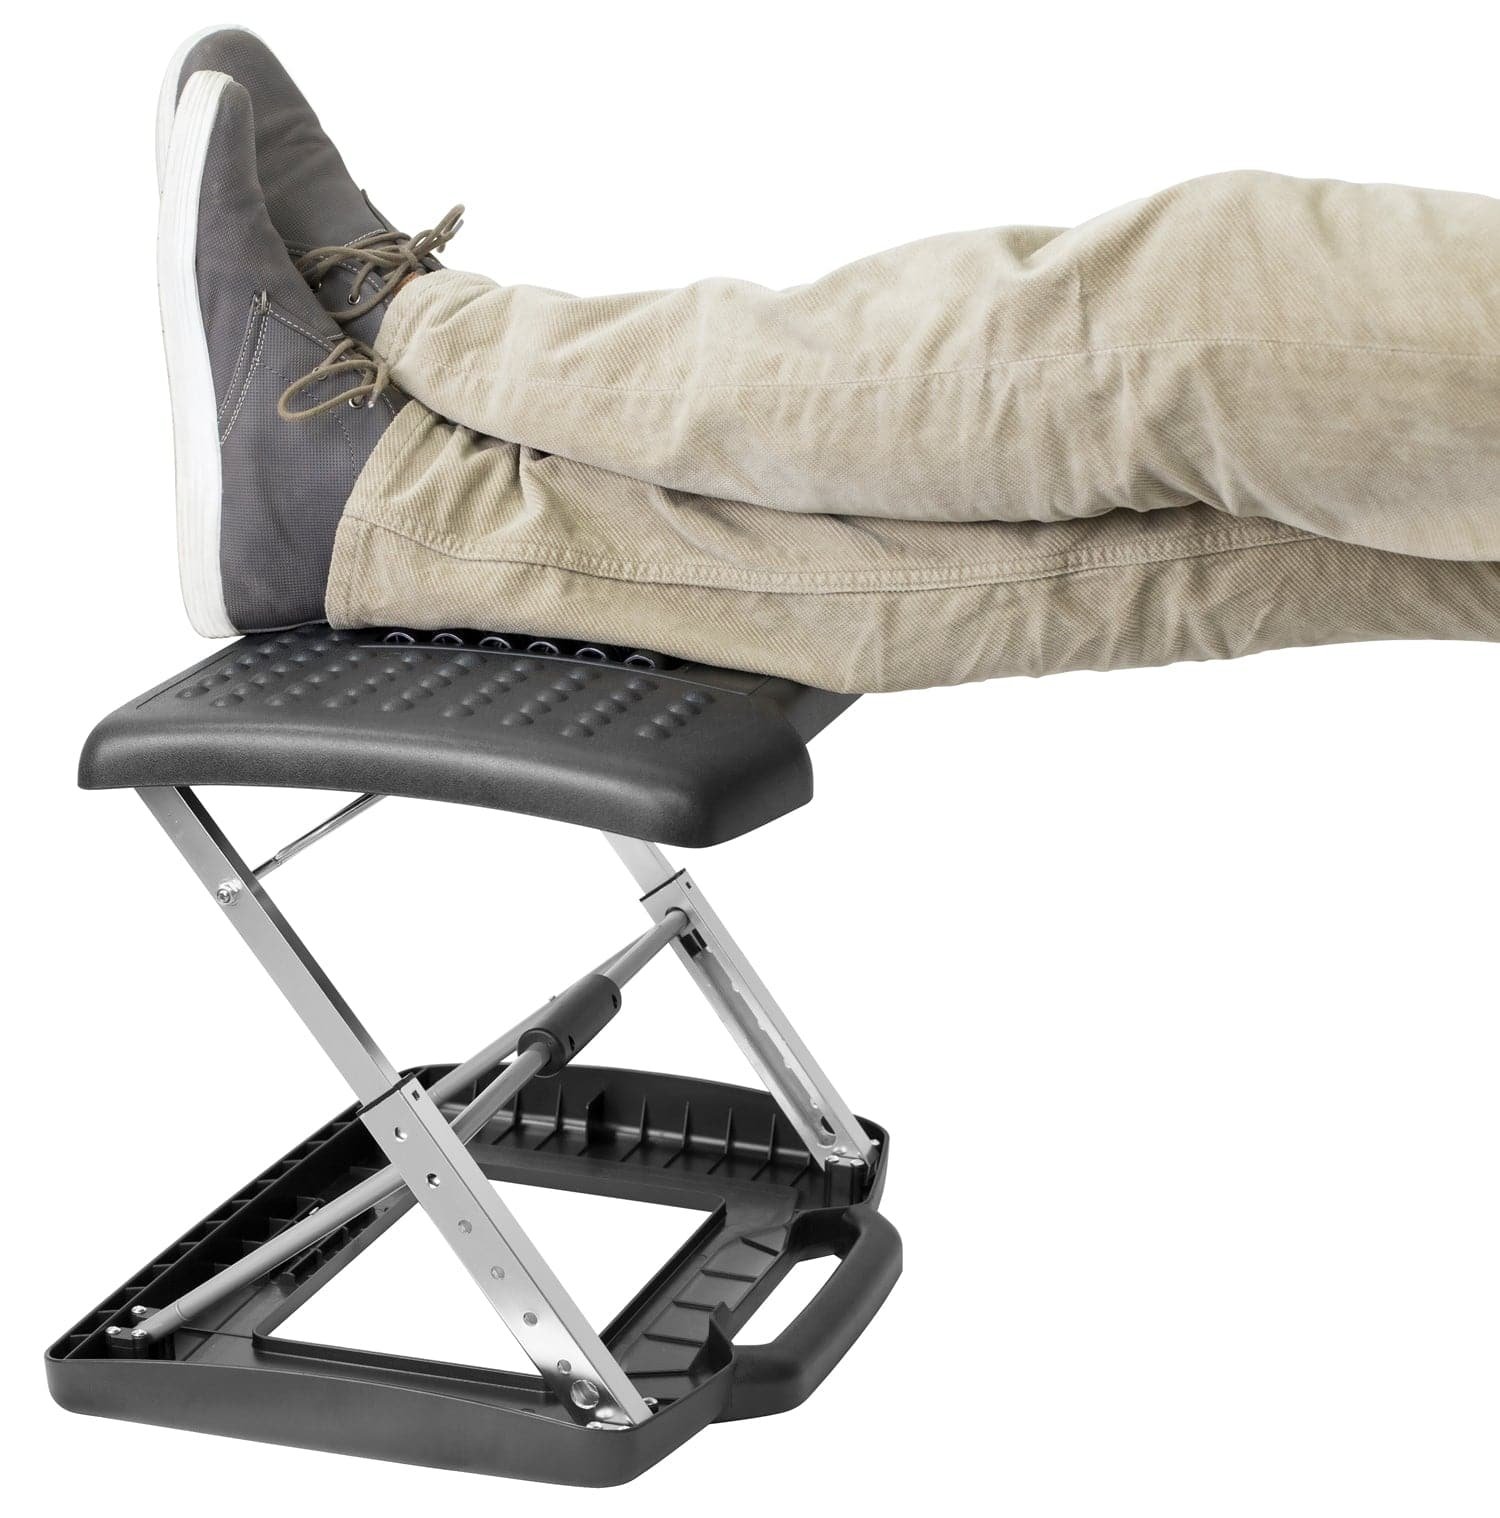 Mount-IT! MI-7808 Under Desk Footrest, Adjustable Height/Angle & Massaging Rollers